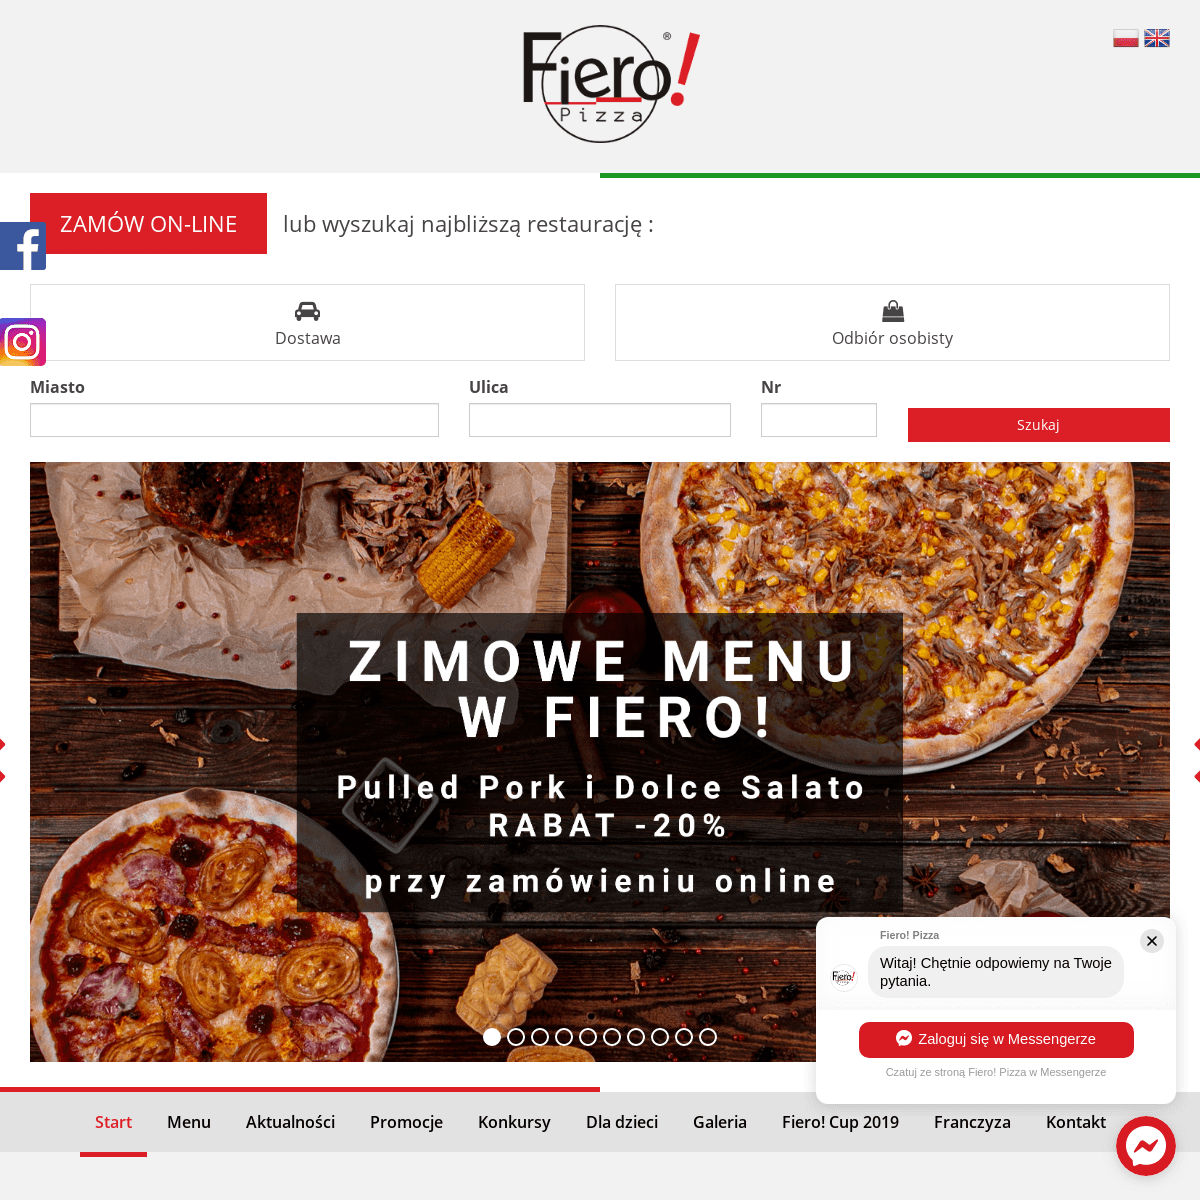 A complete backup of fieropizza.pl